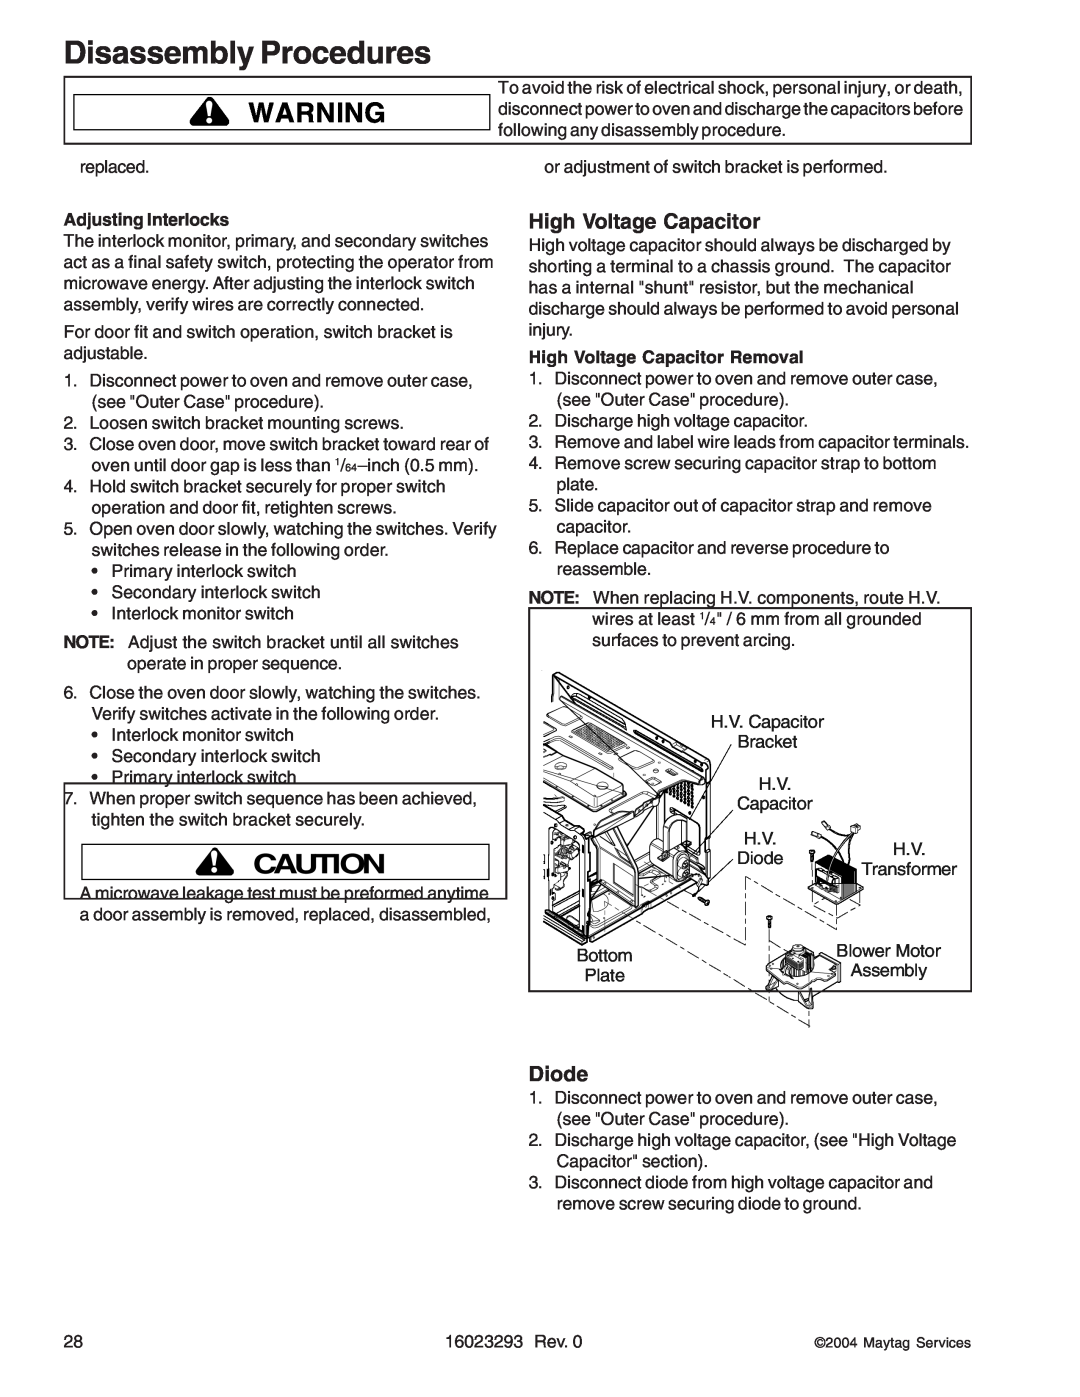 Maytag RCS Diode, Disassembly Procedures, Adjusting Interlocks, High Voltage Capacitor Removal, H.V. Capacitor Bracket 